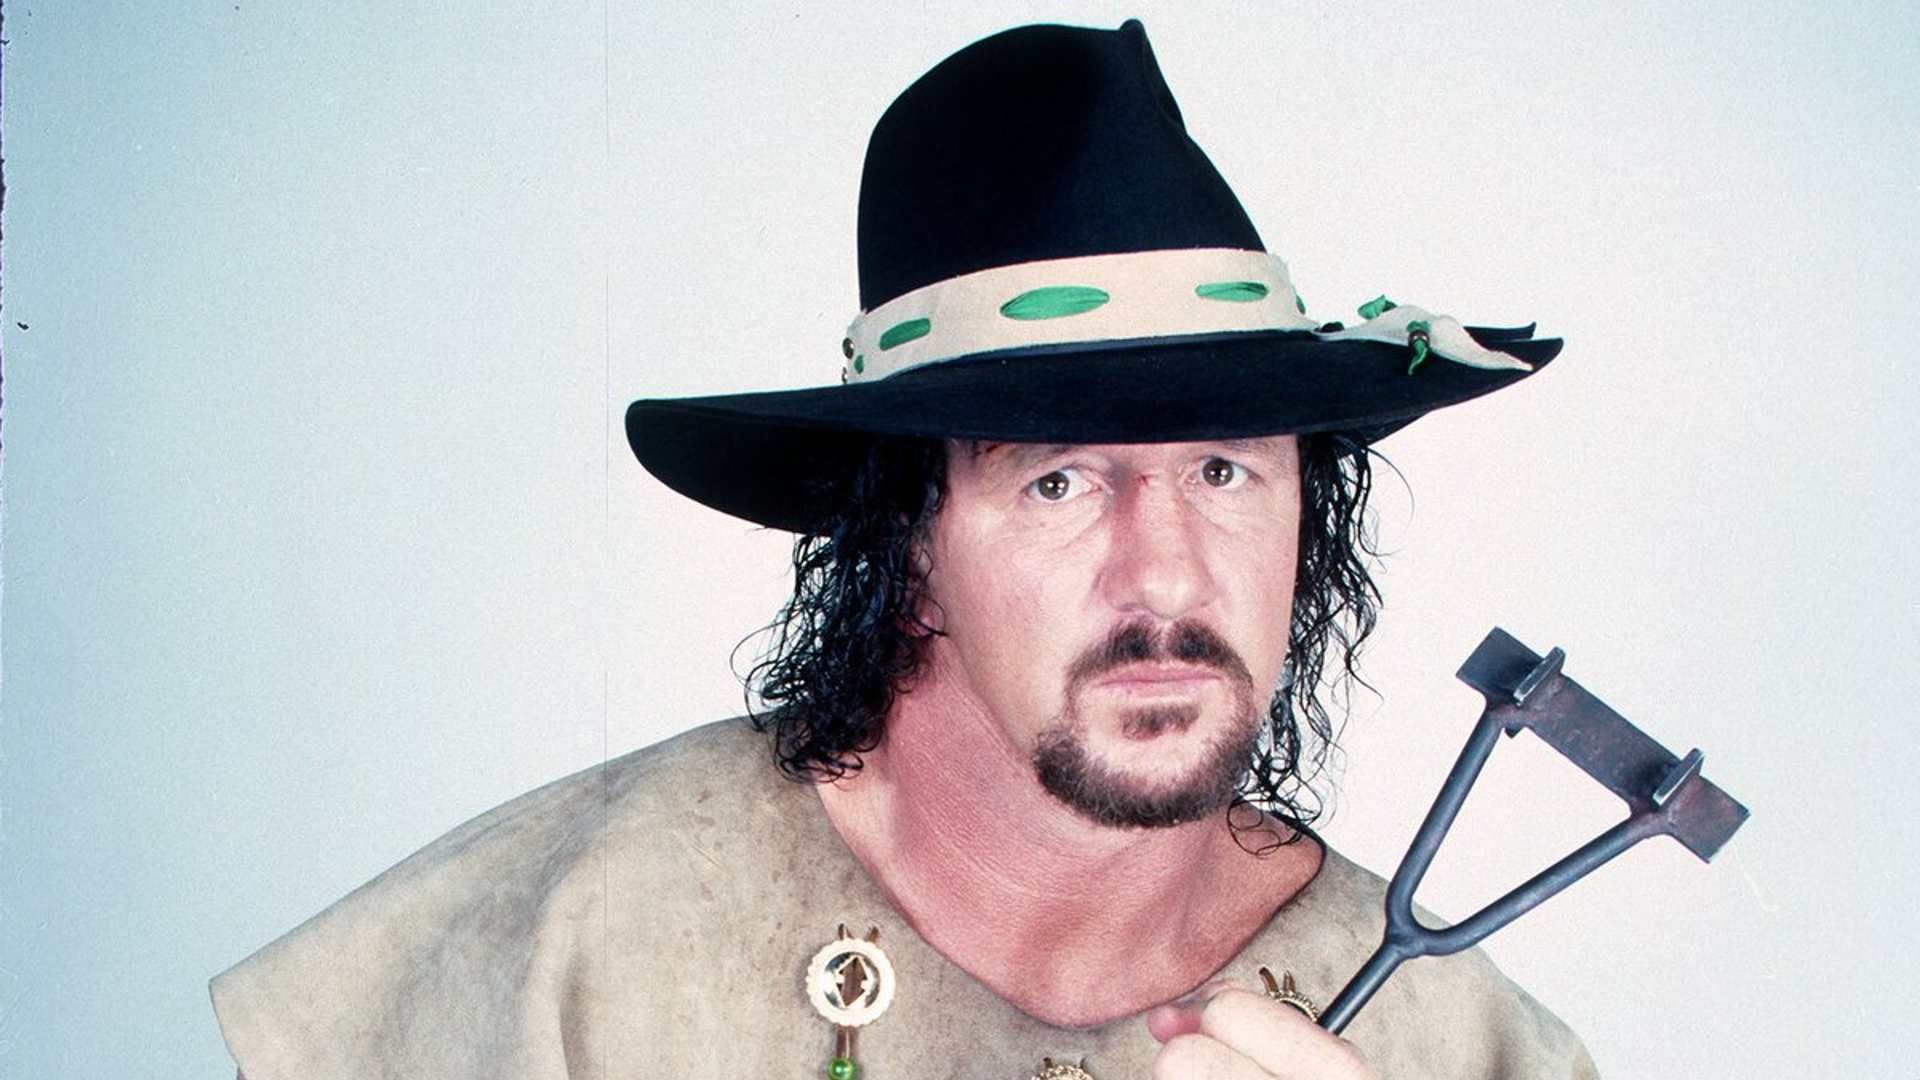 Terry Funk in 1980s WWE